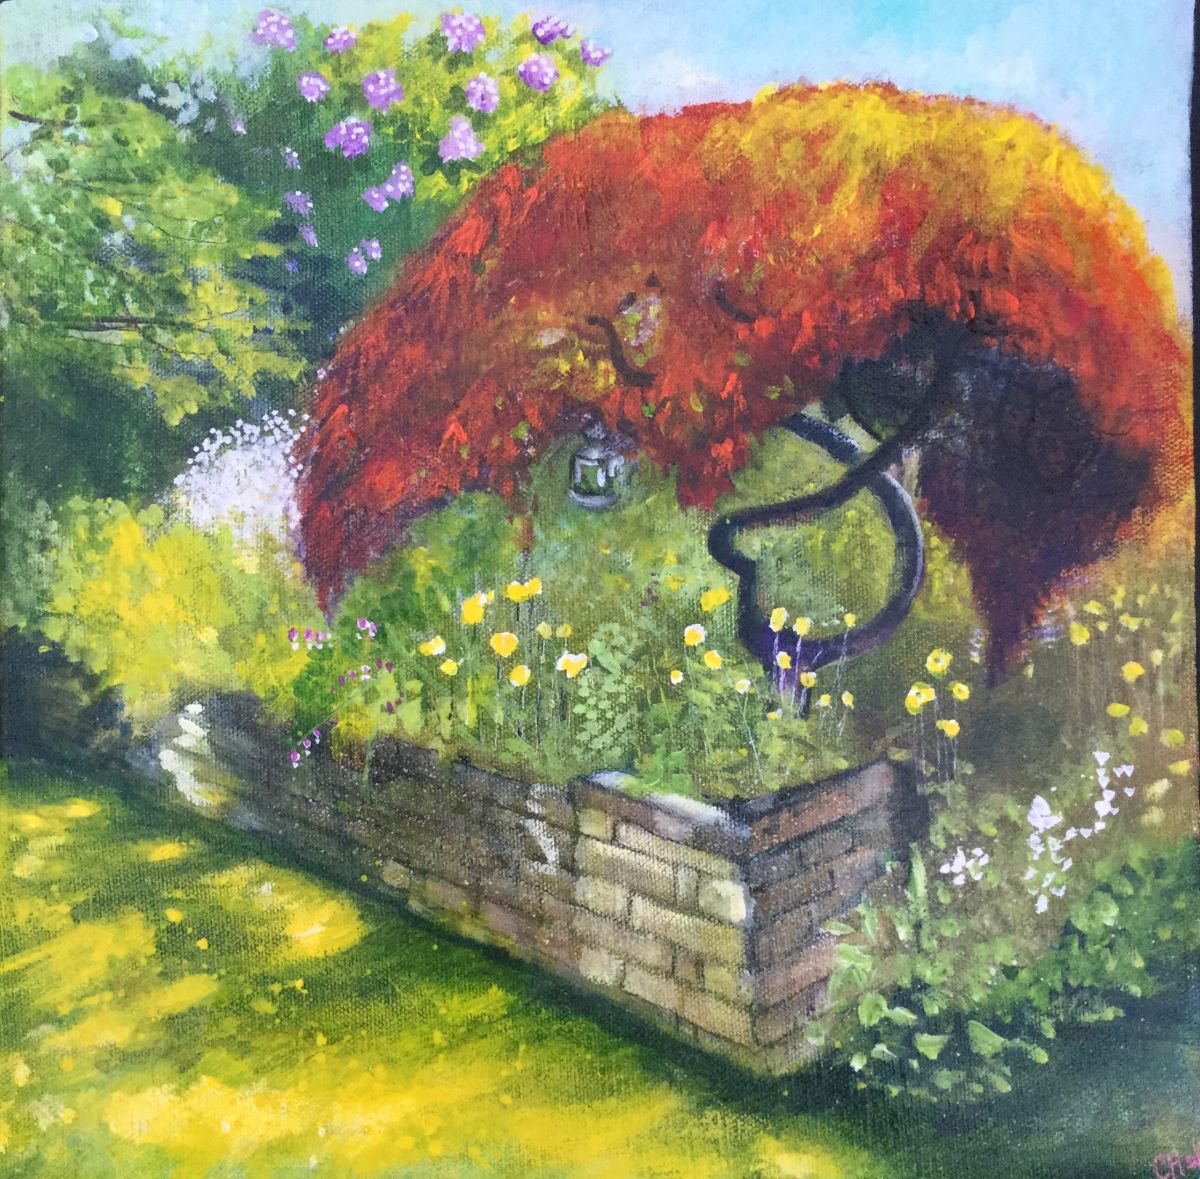 Summer garden - Japanese Maple by Carole Ann Hall